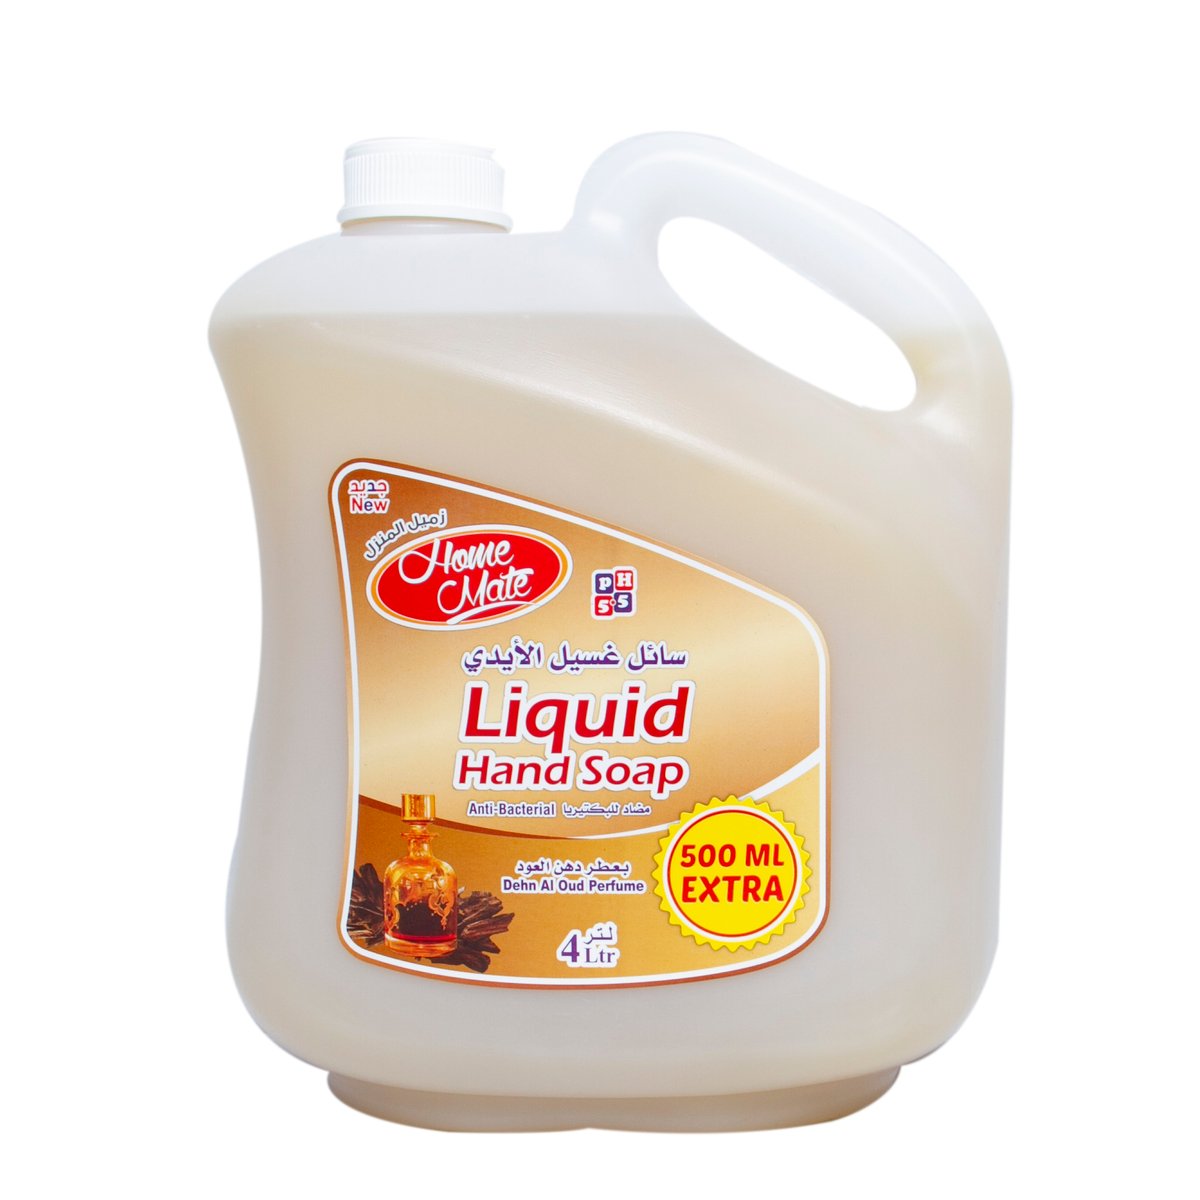 Home Mate Liquid Hand Soap Dehn Al Oud Perfume 4 Litres + 500 ml